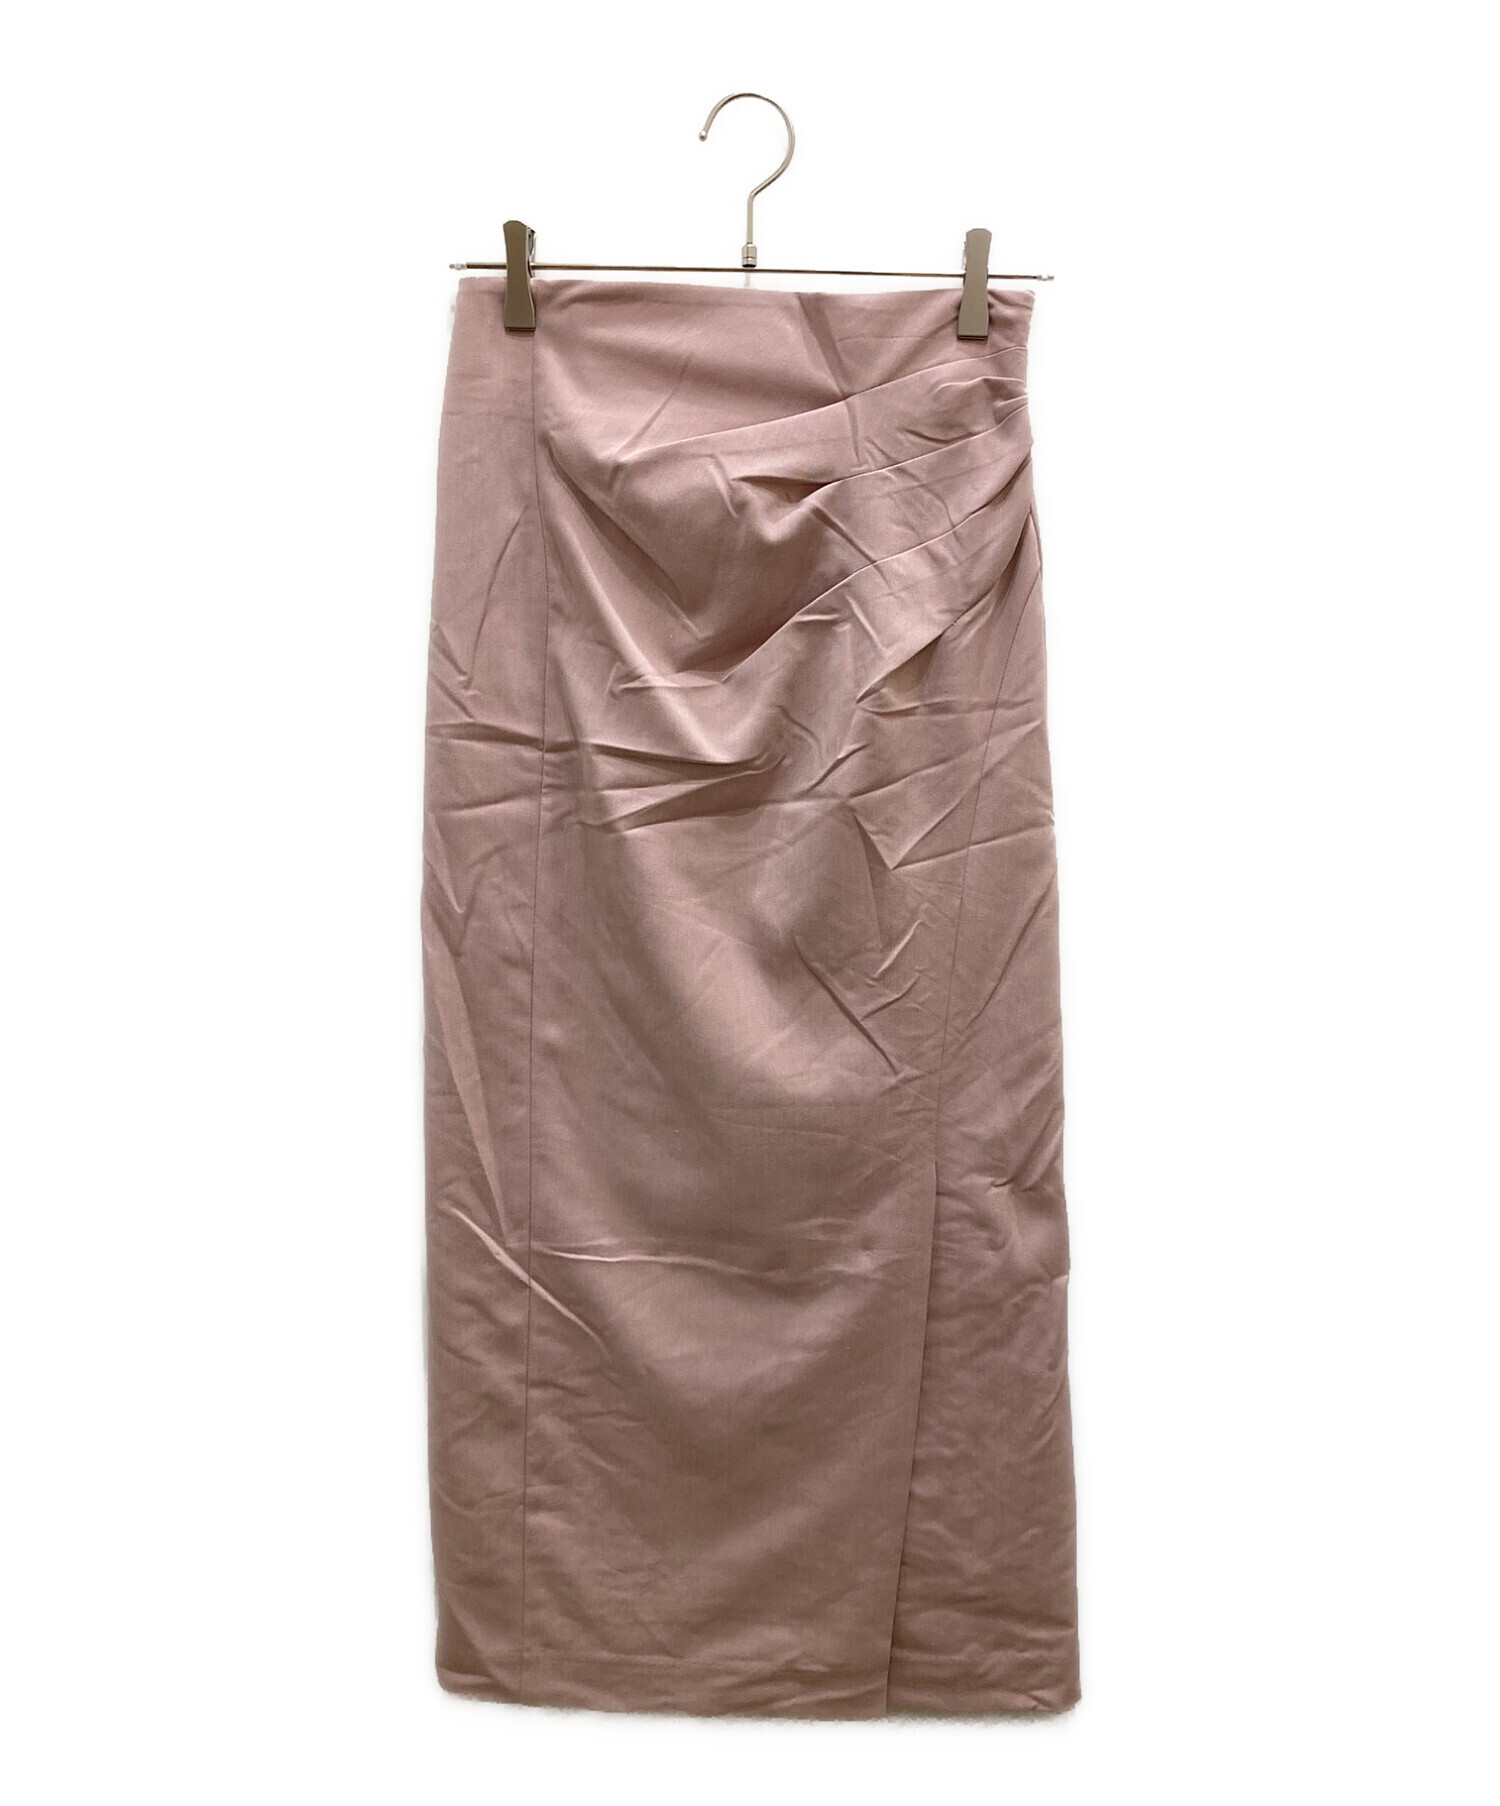 Apuweiser-riche (アプワイザーリッシェ) アシメドレープタイトスカート ピンク サイズ:2